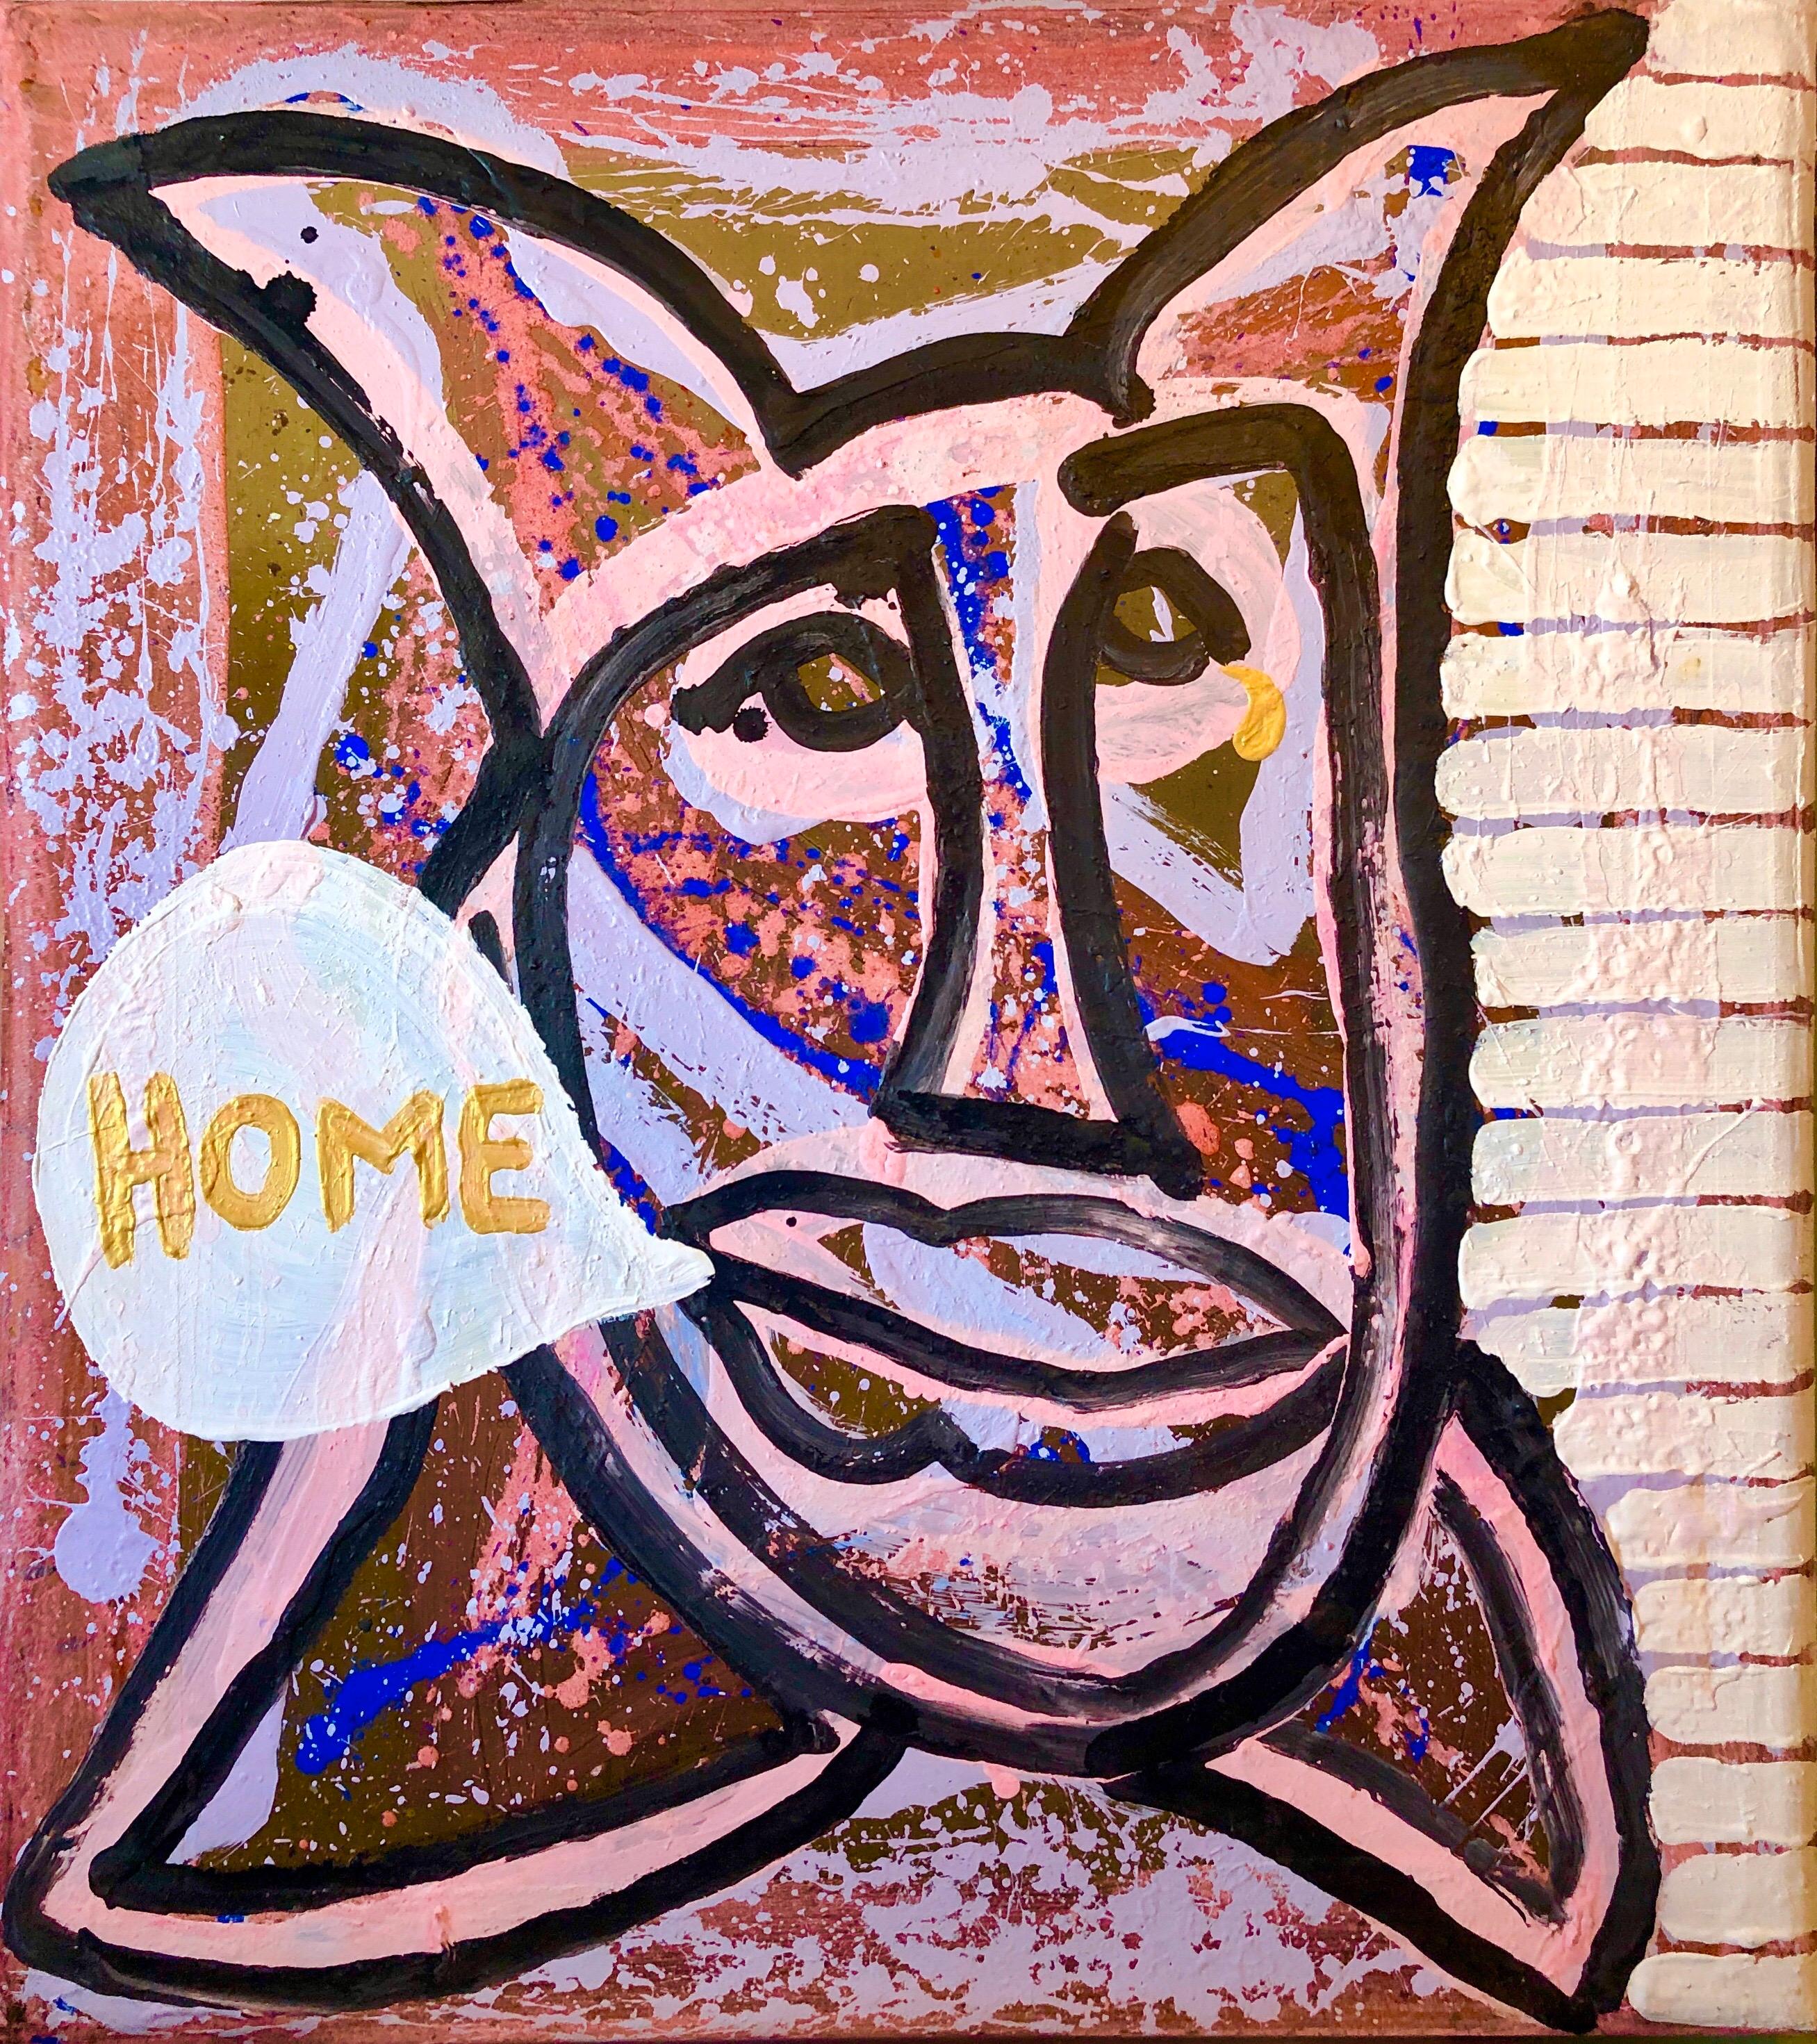 Konzeptionelle Pop-Art-Farbe-Mischtechnik-Gemälde "Home"" Brooke Alexander Gallery